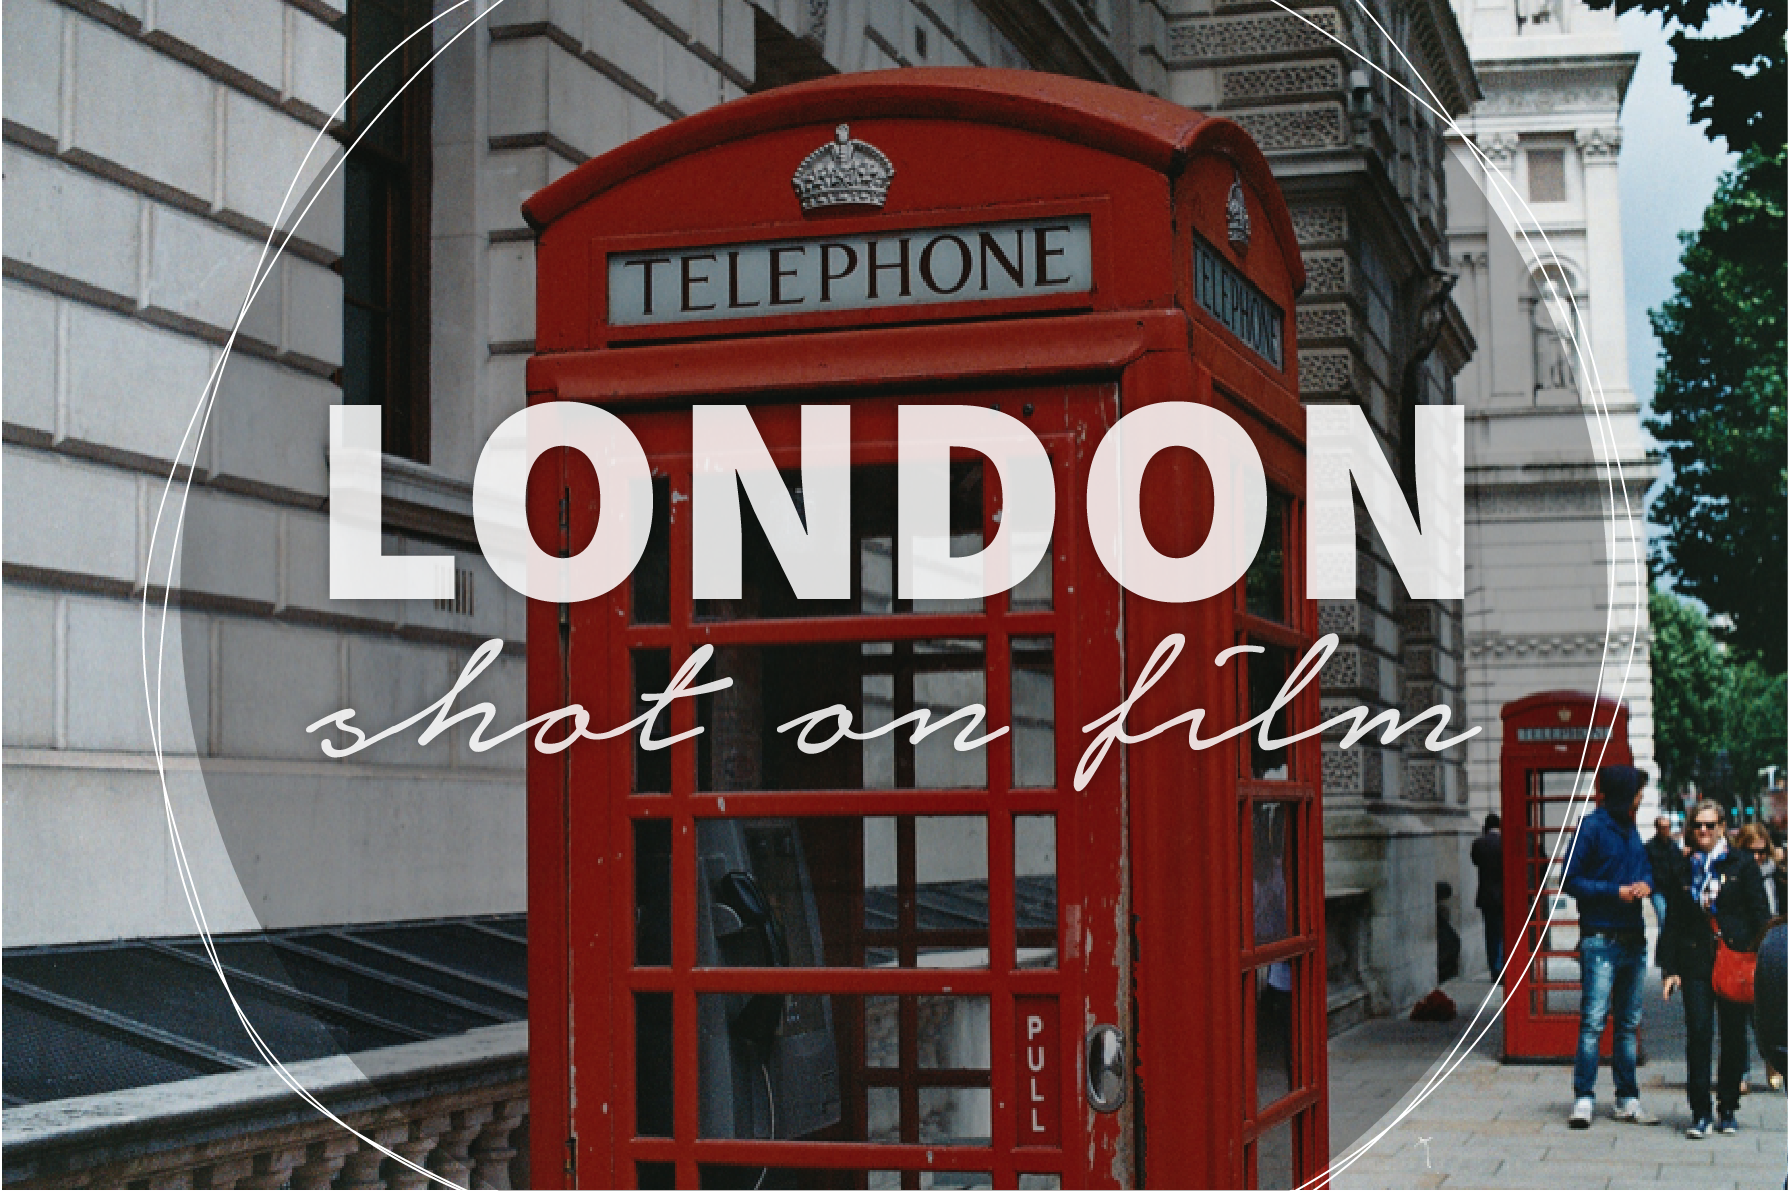 London, shot on film